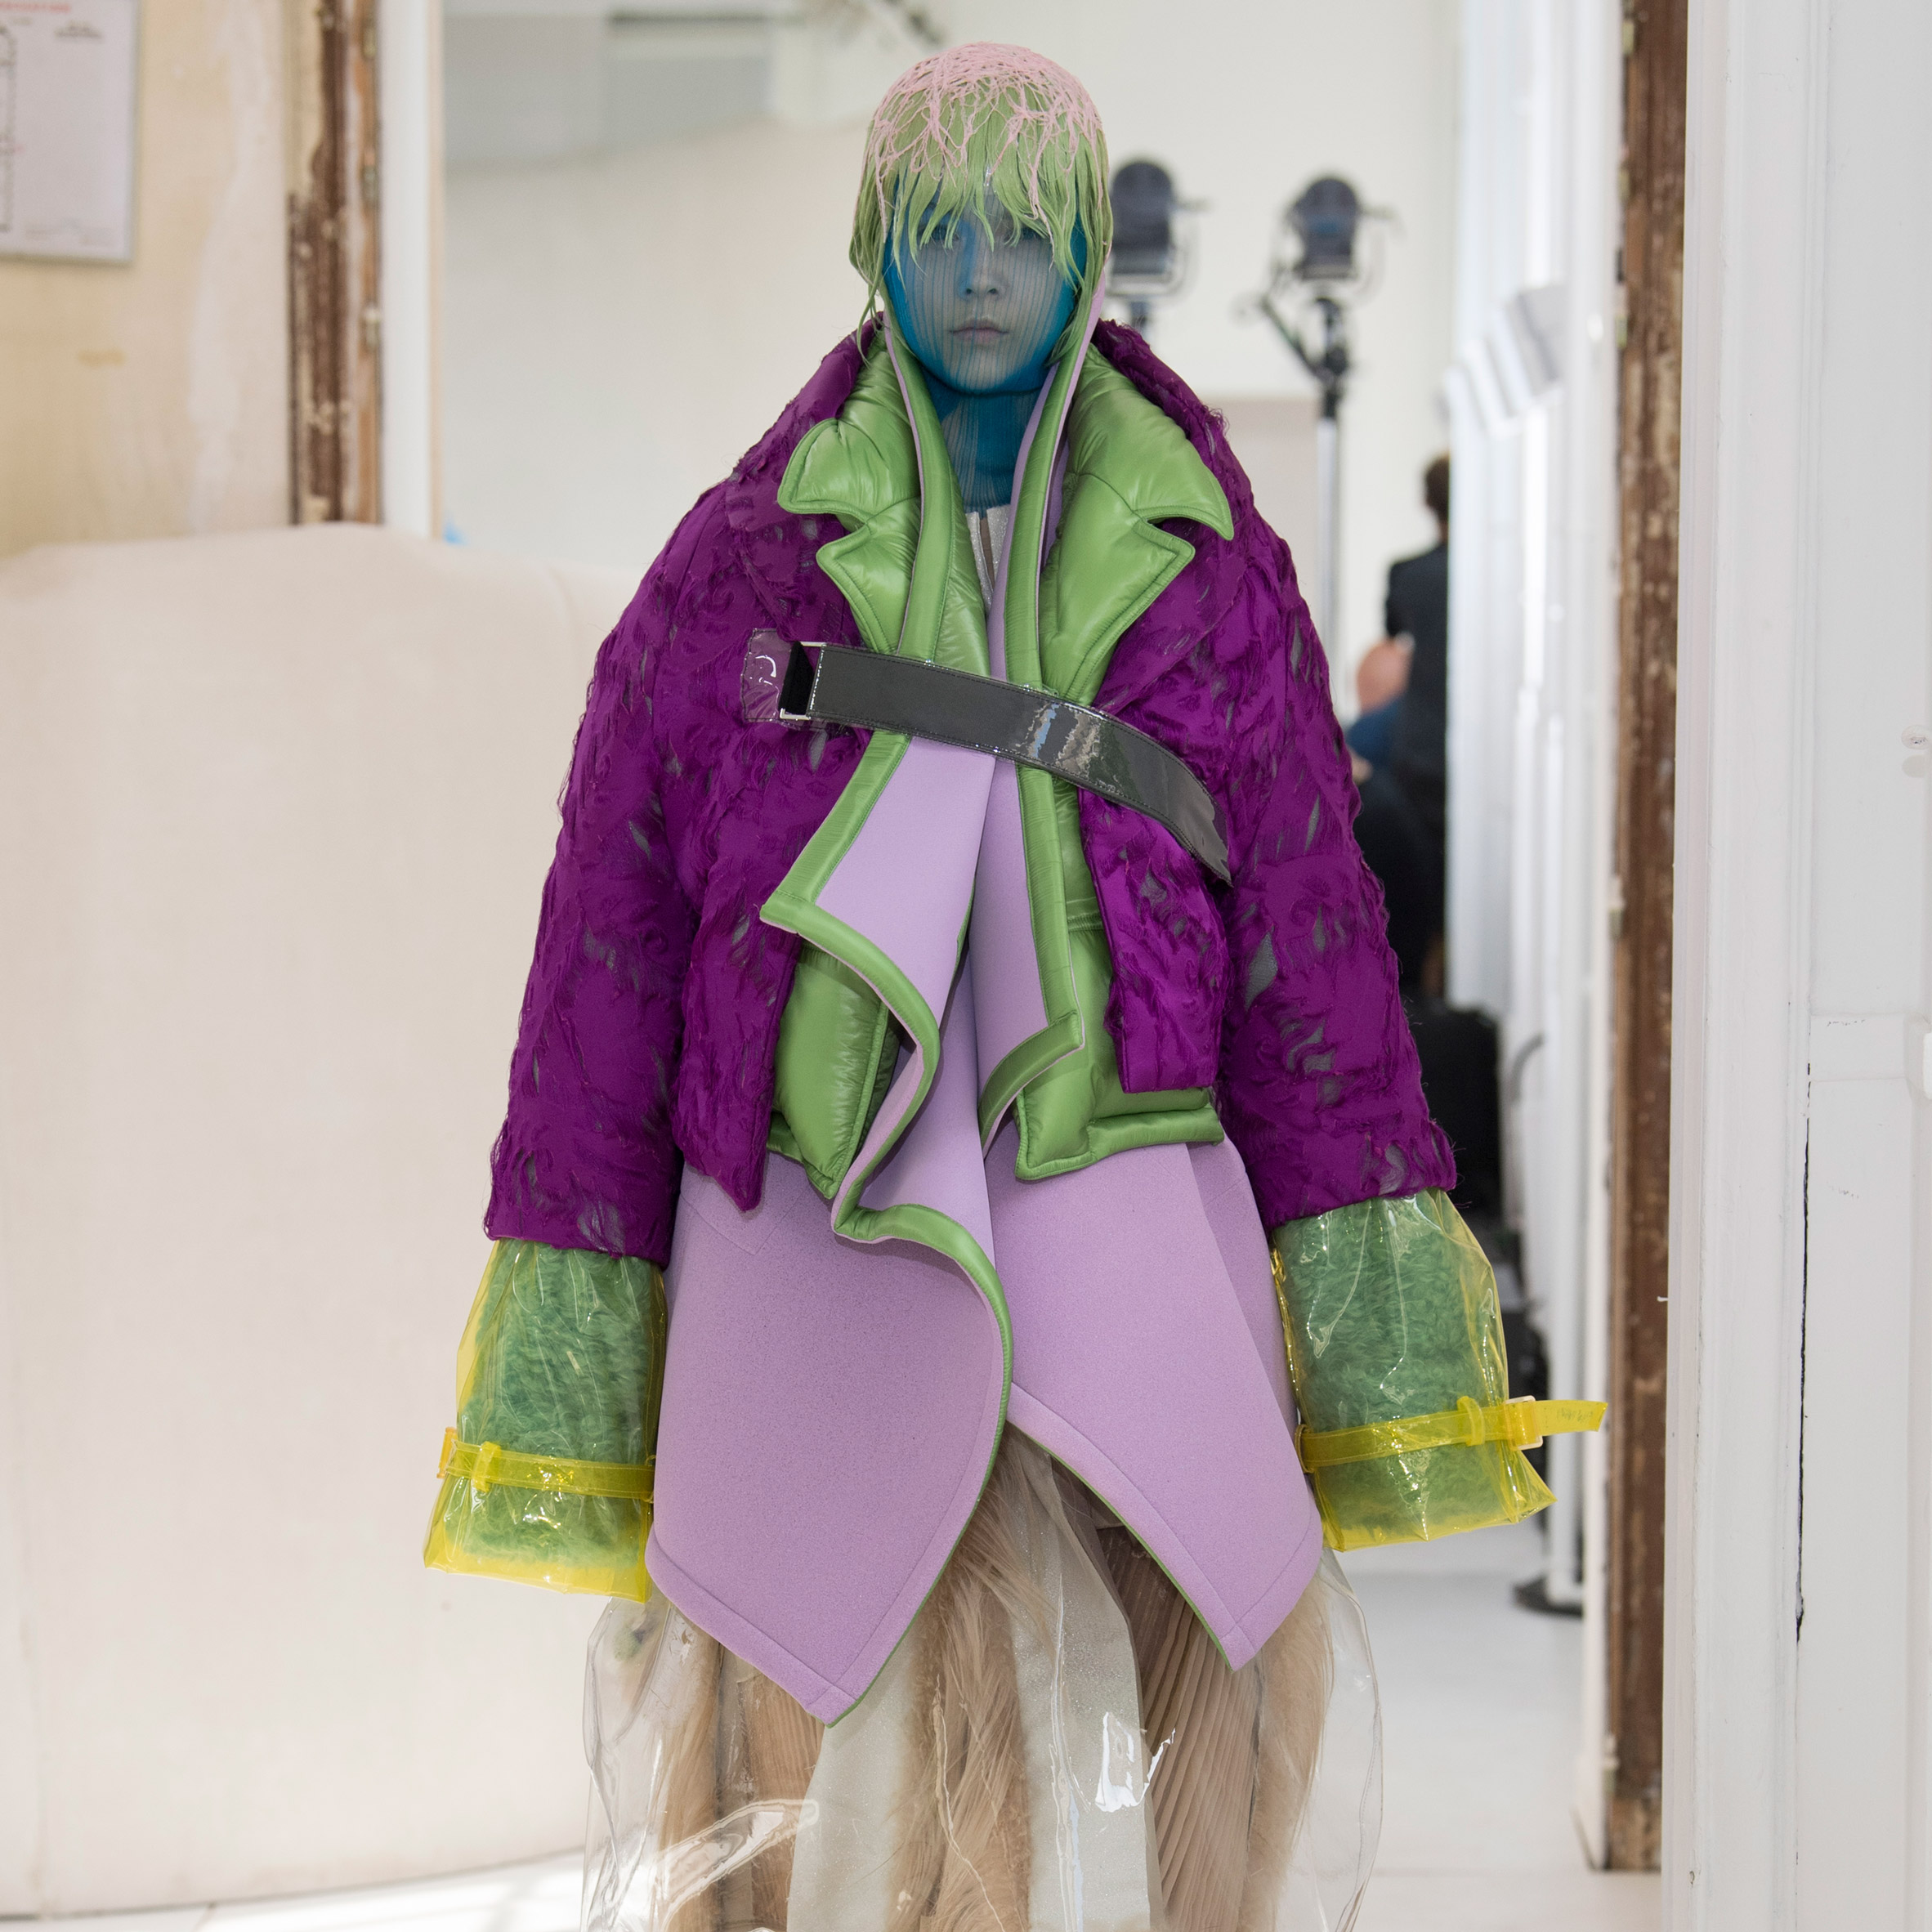 Maison Margiela's John Galliano Is the Latest Couture Designer to Go  Fur-Free